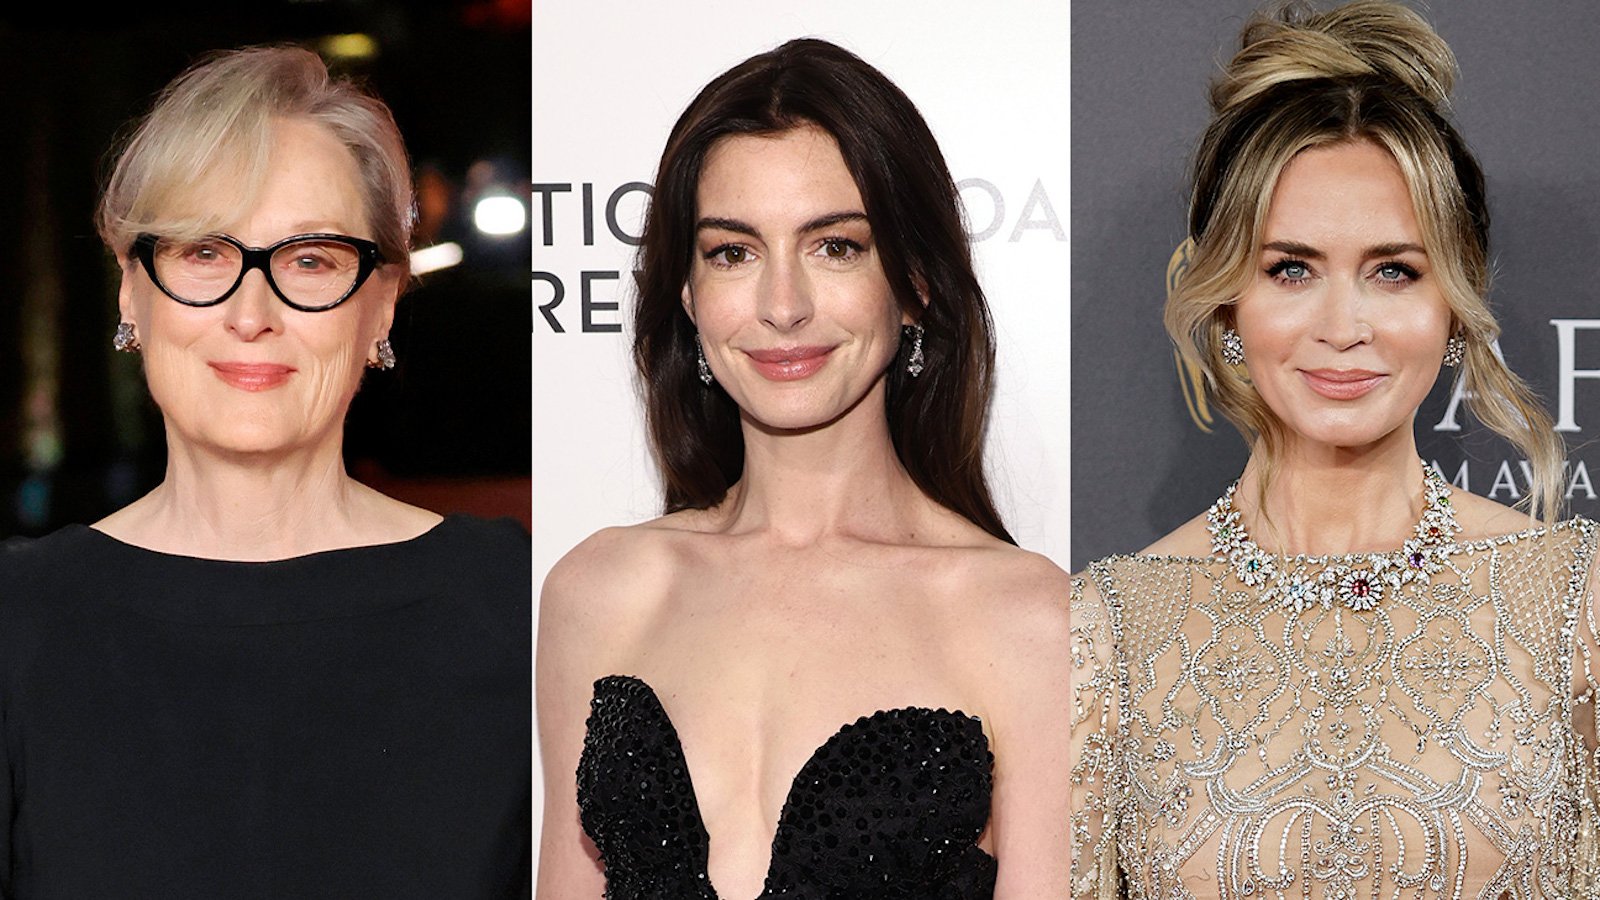 Il Diavolo Veste Prada: Meryl Streep, Anne Hathaway e Emily Blunt di nuovo insieme per i SAG Awards